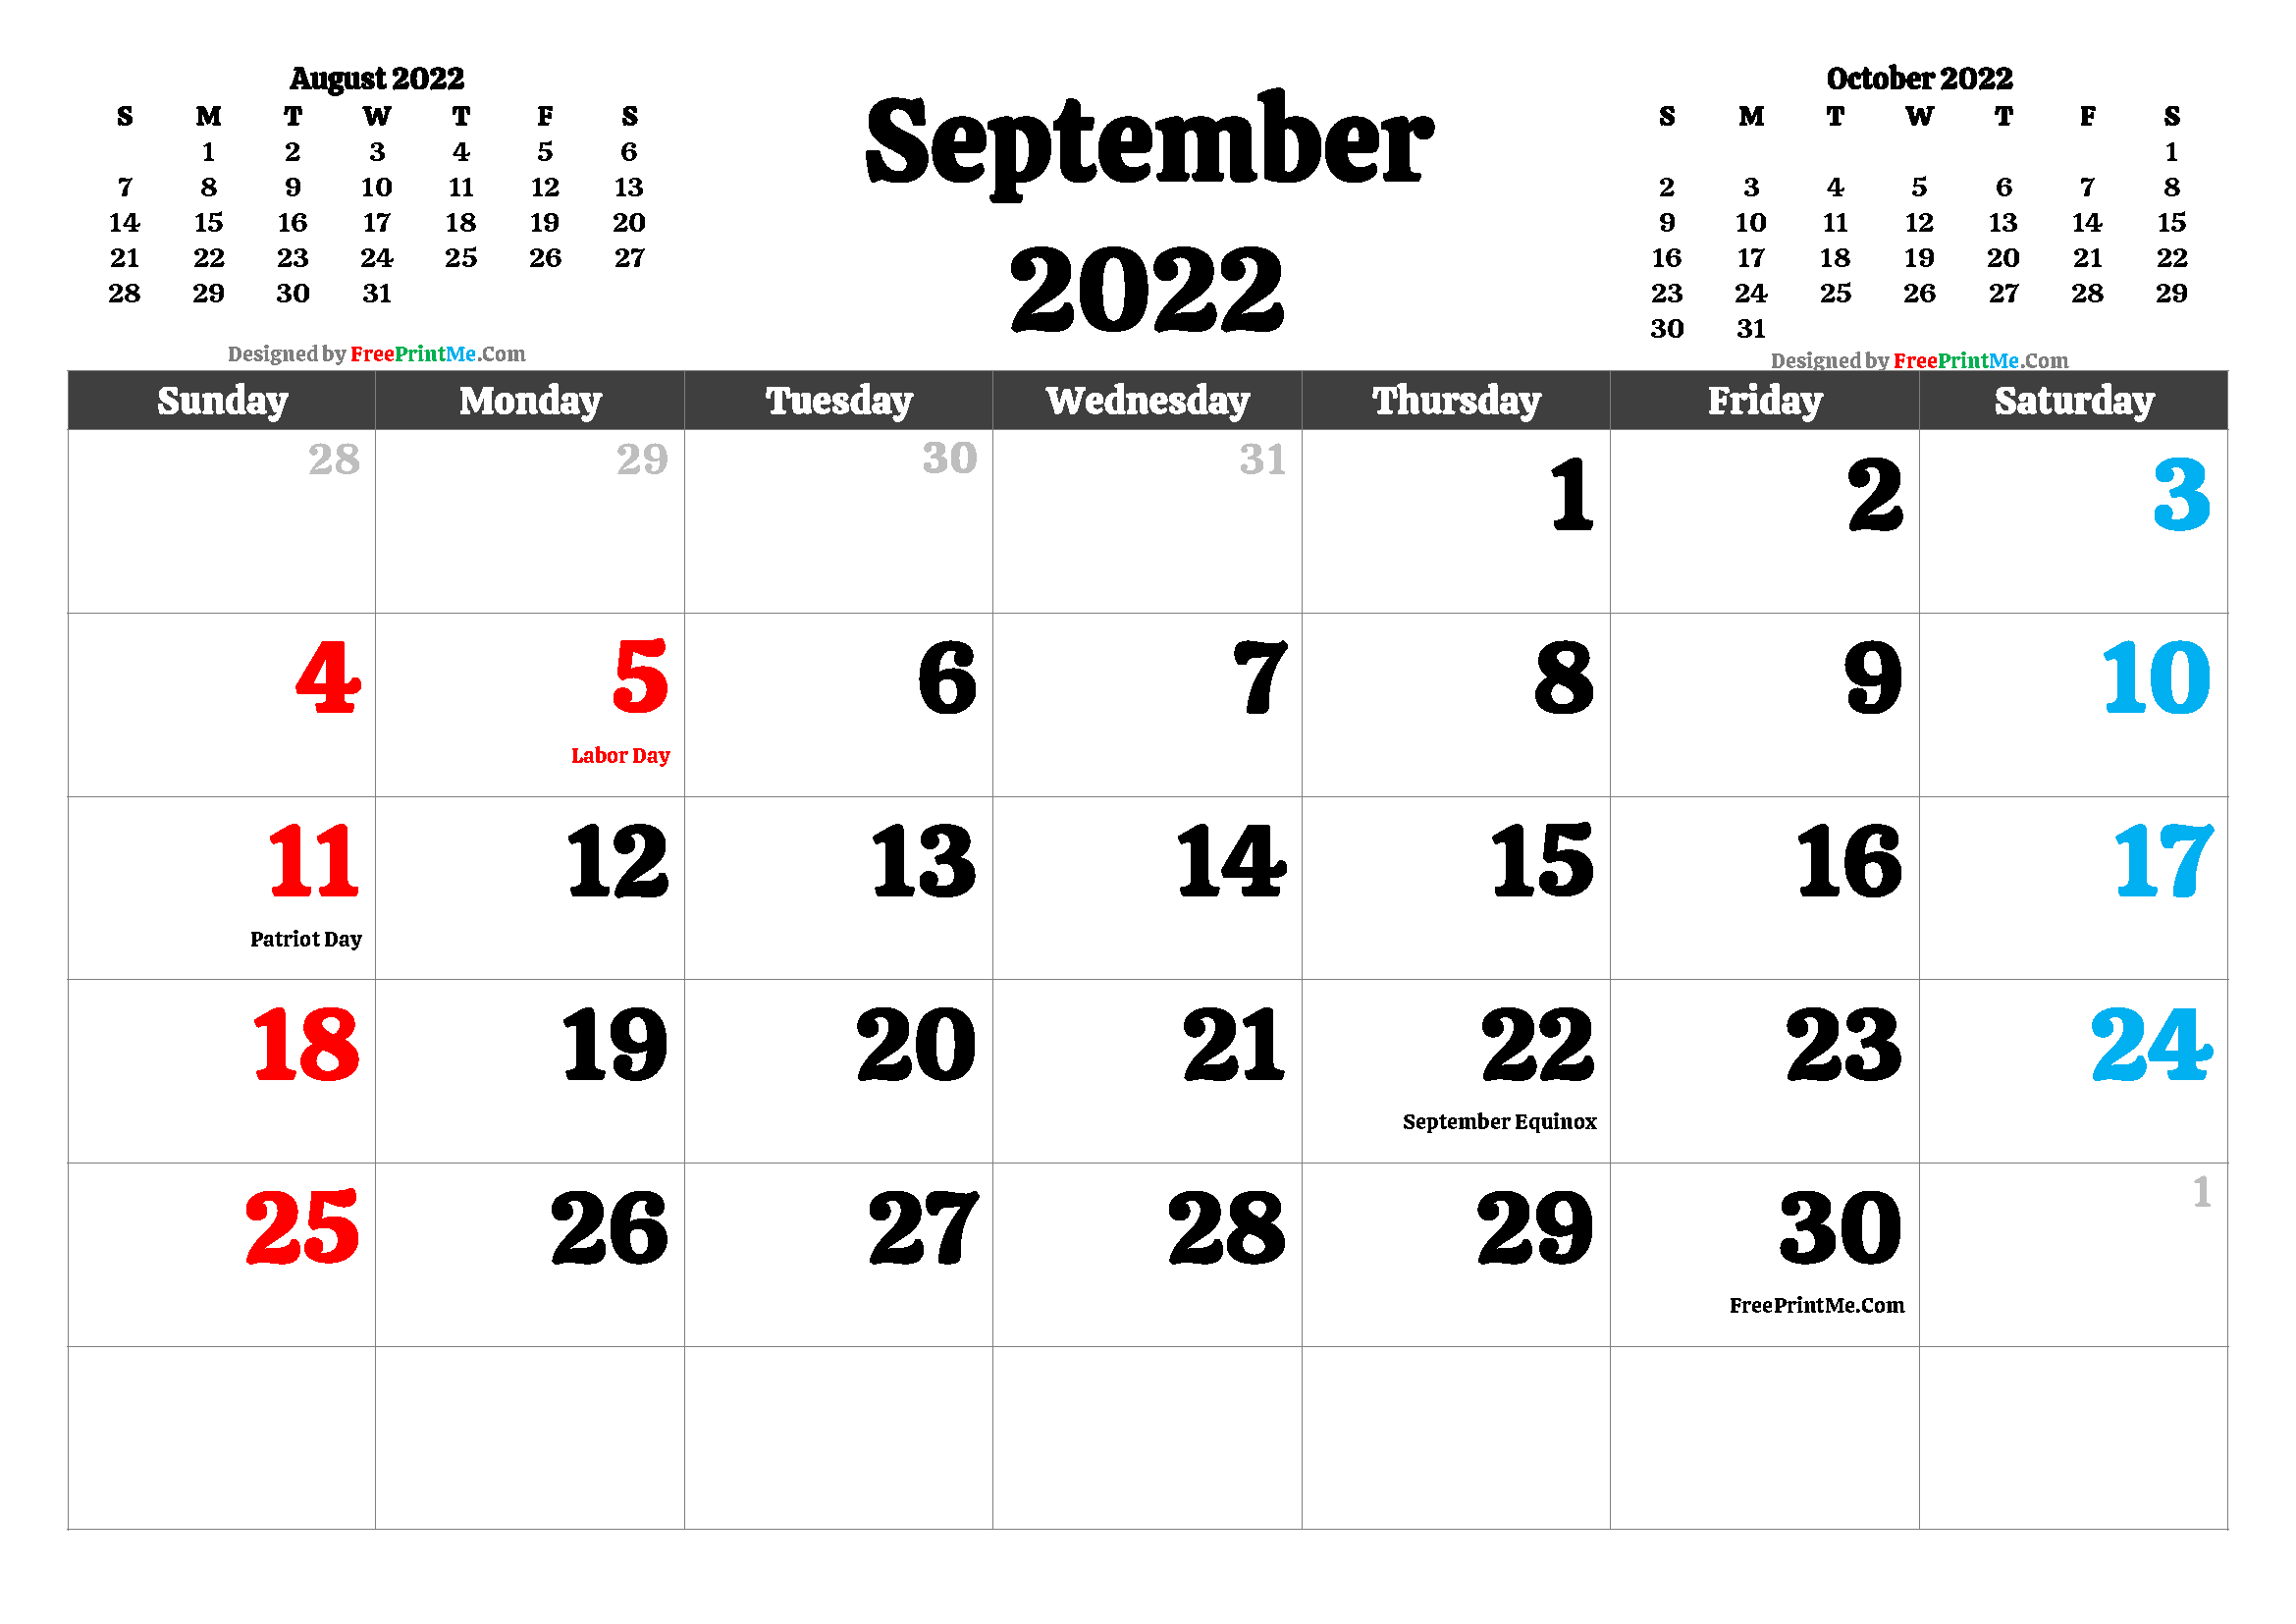 September 2022 Calendar Holidays Free Printable September 2022 Calendar With Holidays - Freeprintme.com